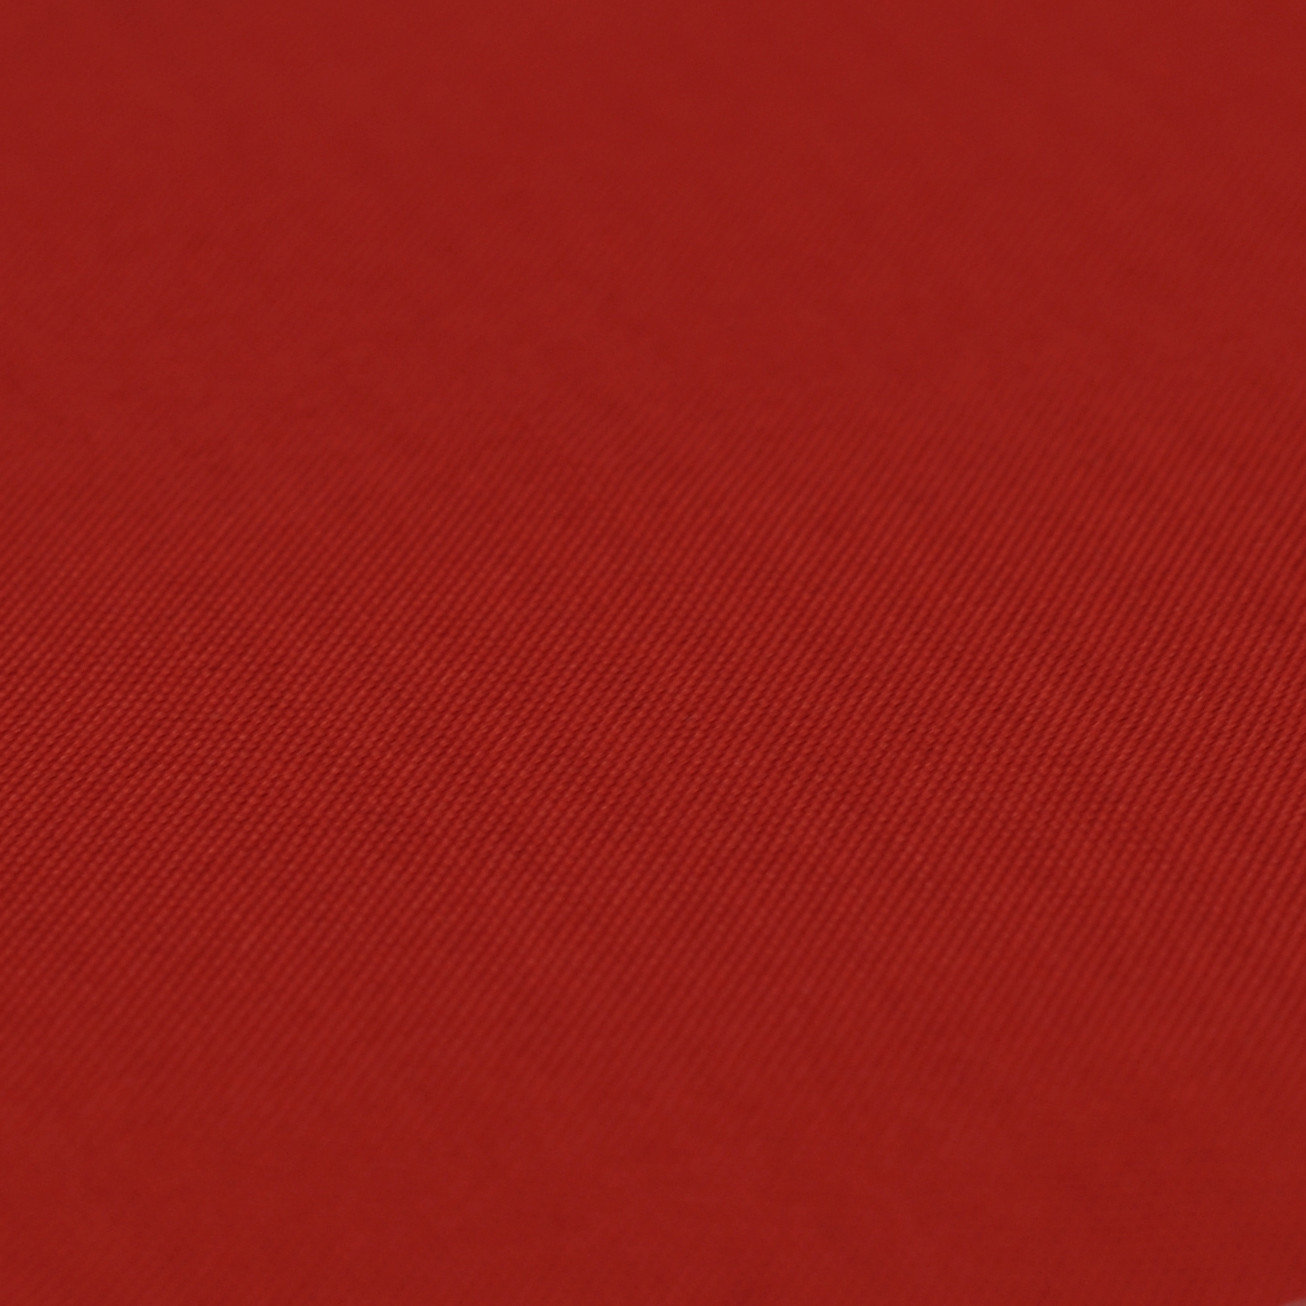 Määrdumiskindel kandiline laudlina Restly punane 150x150